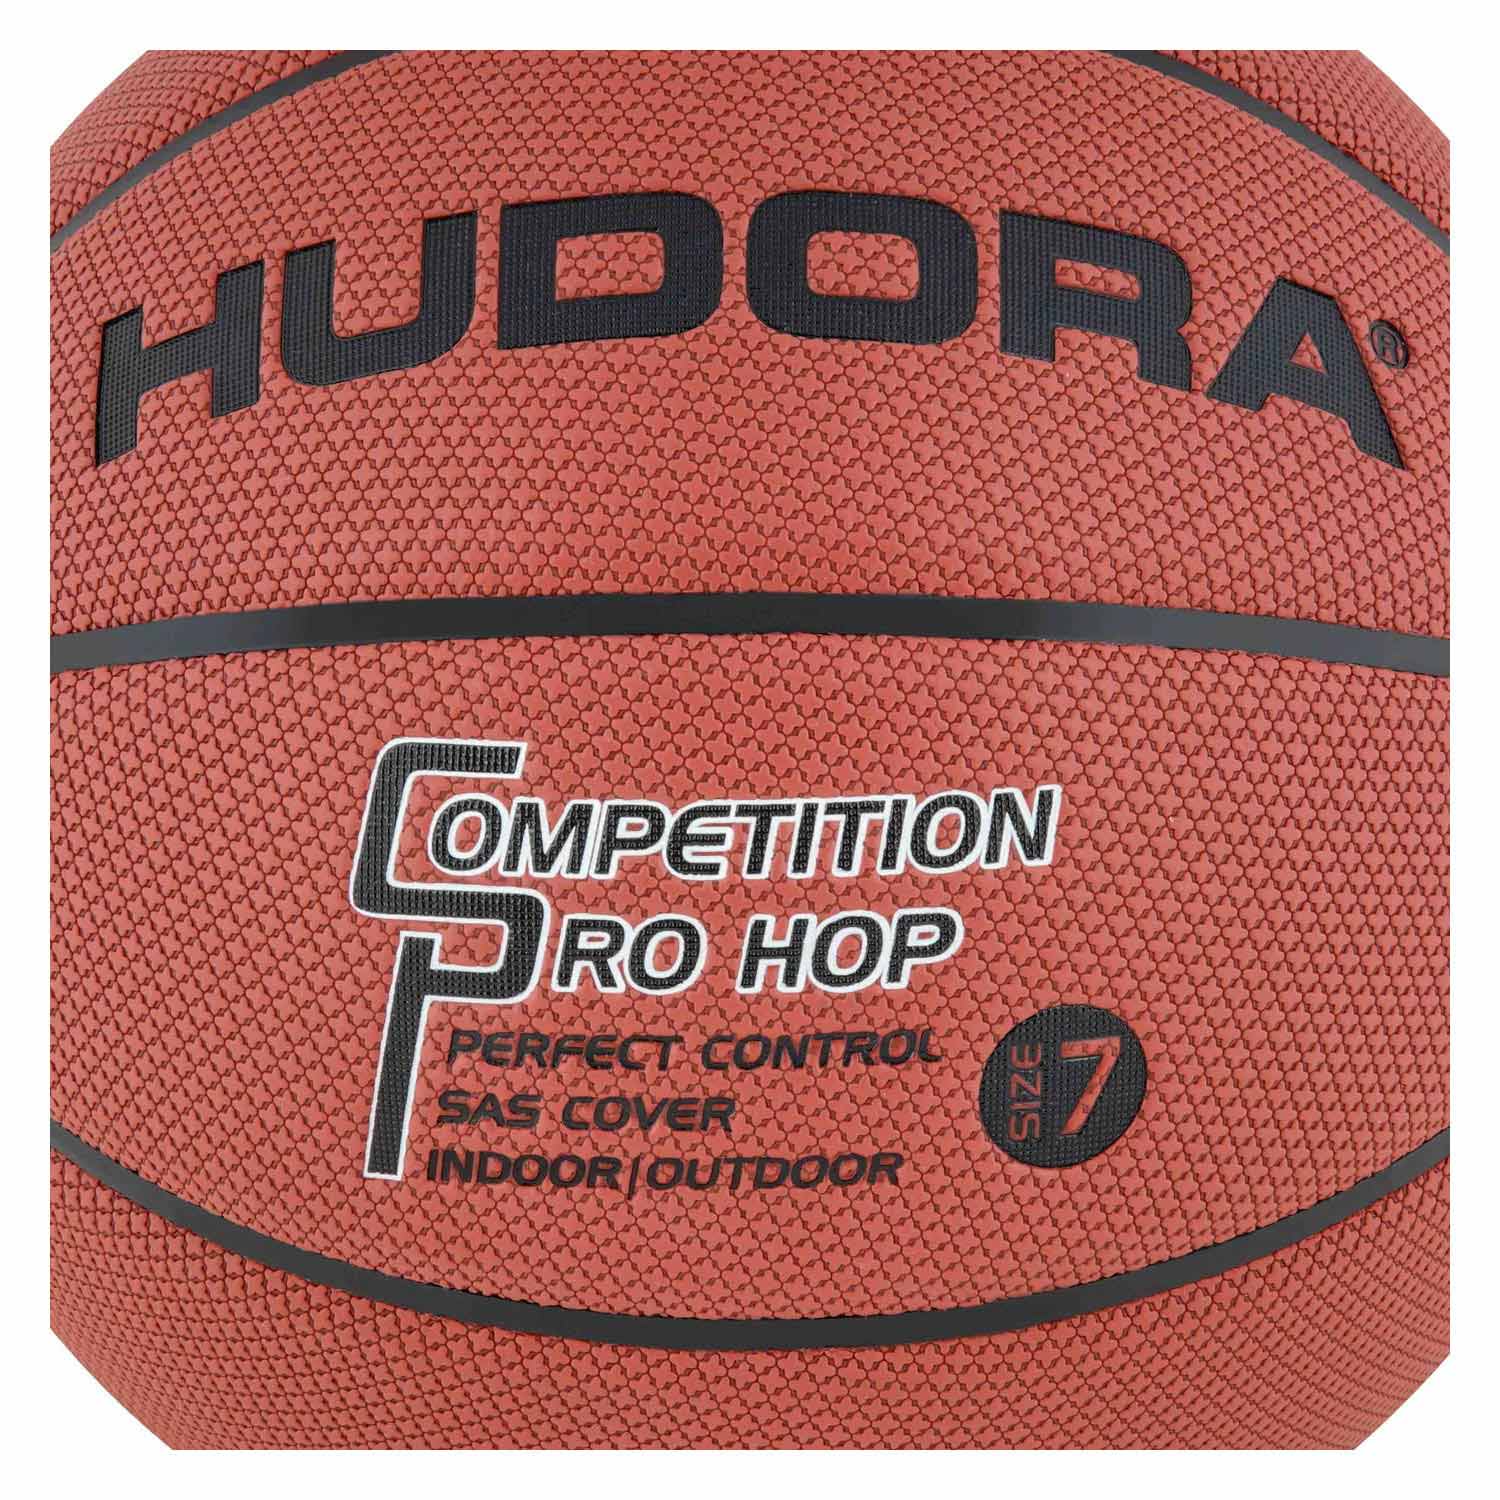 HUDORA Basketball Compétition Pro